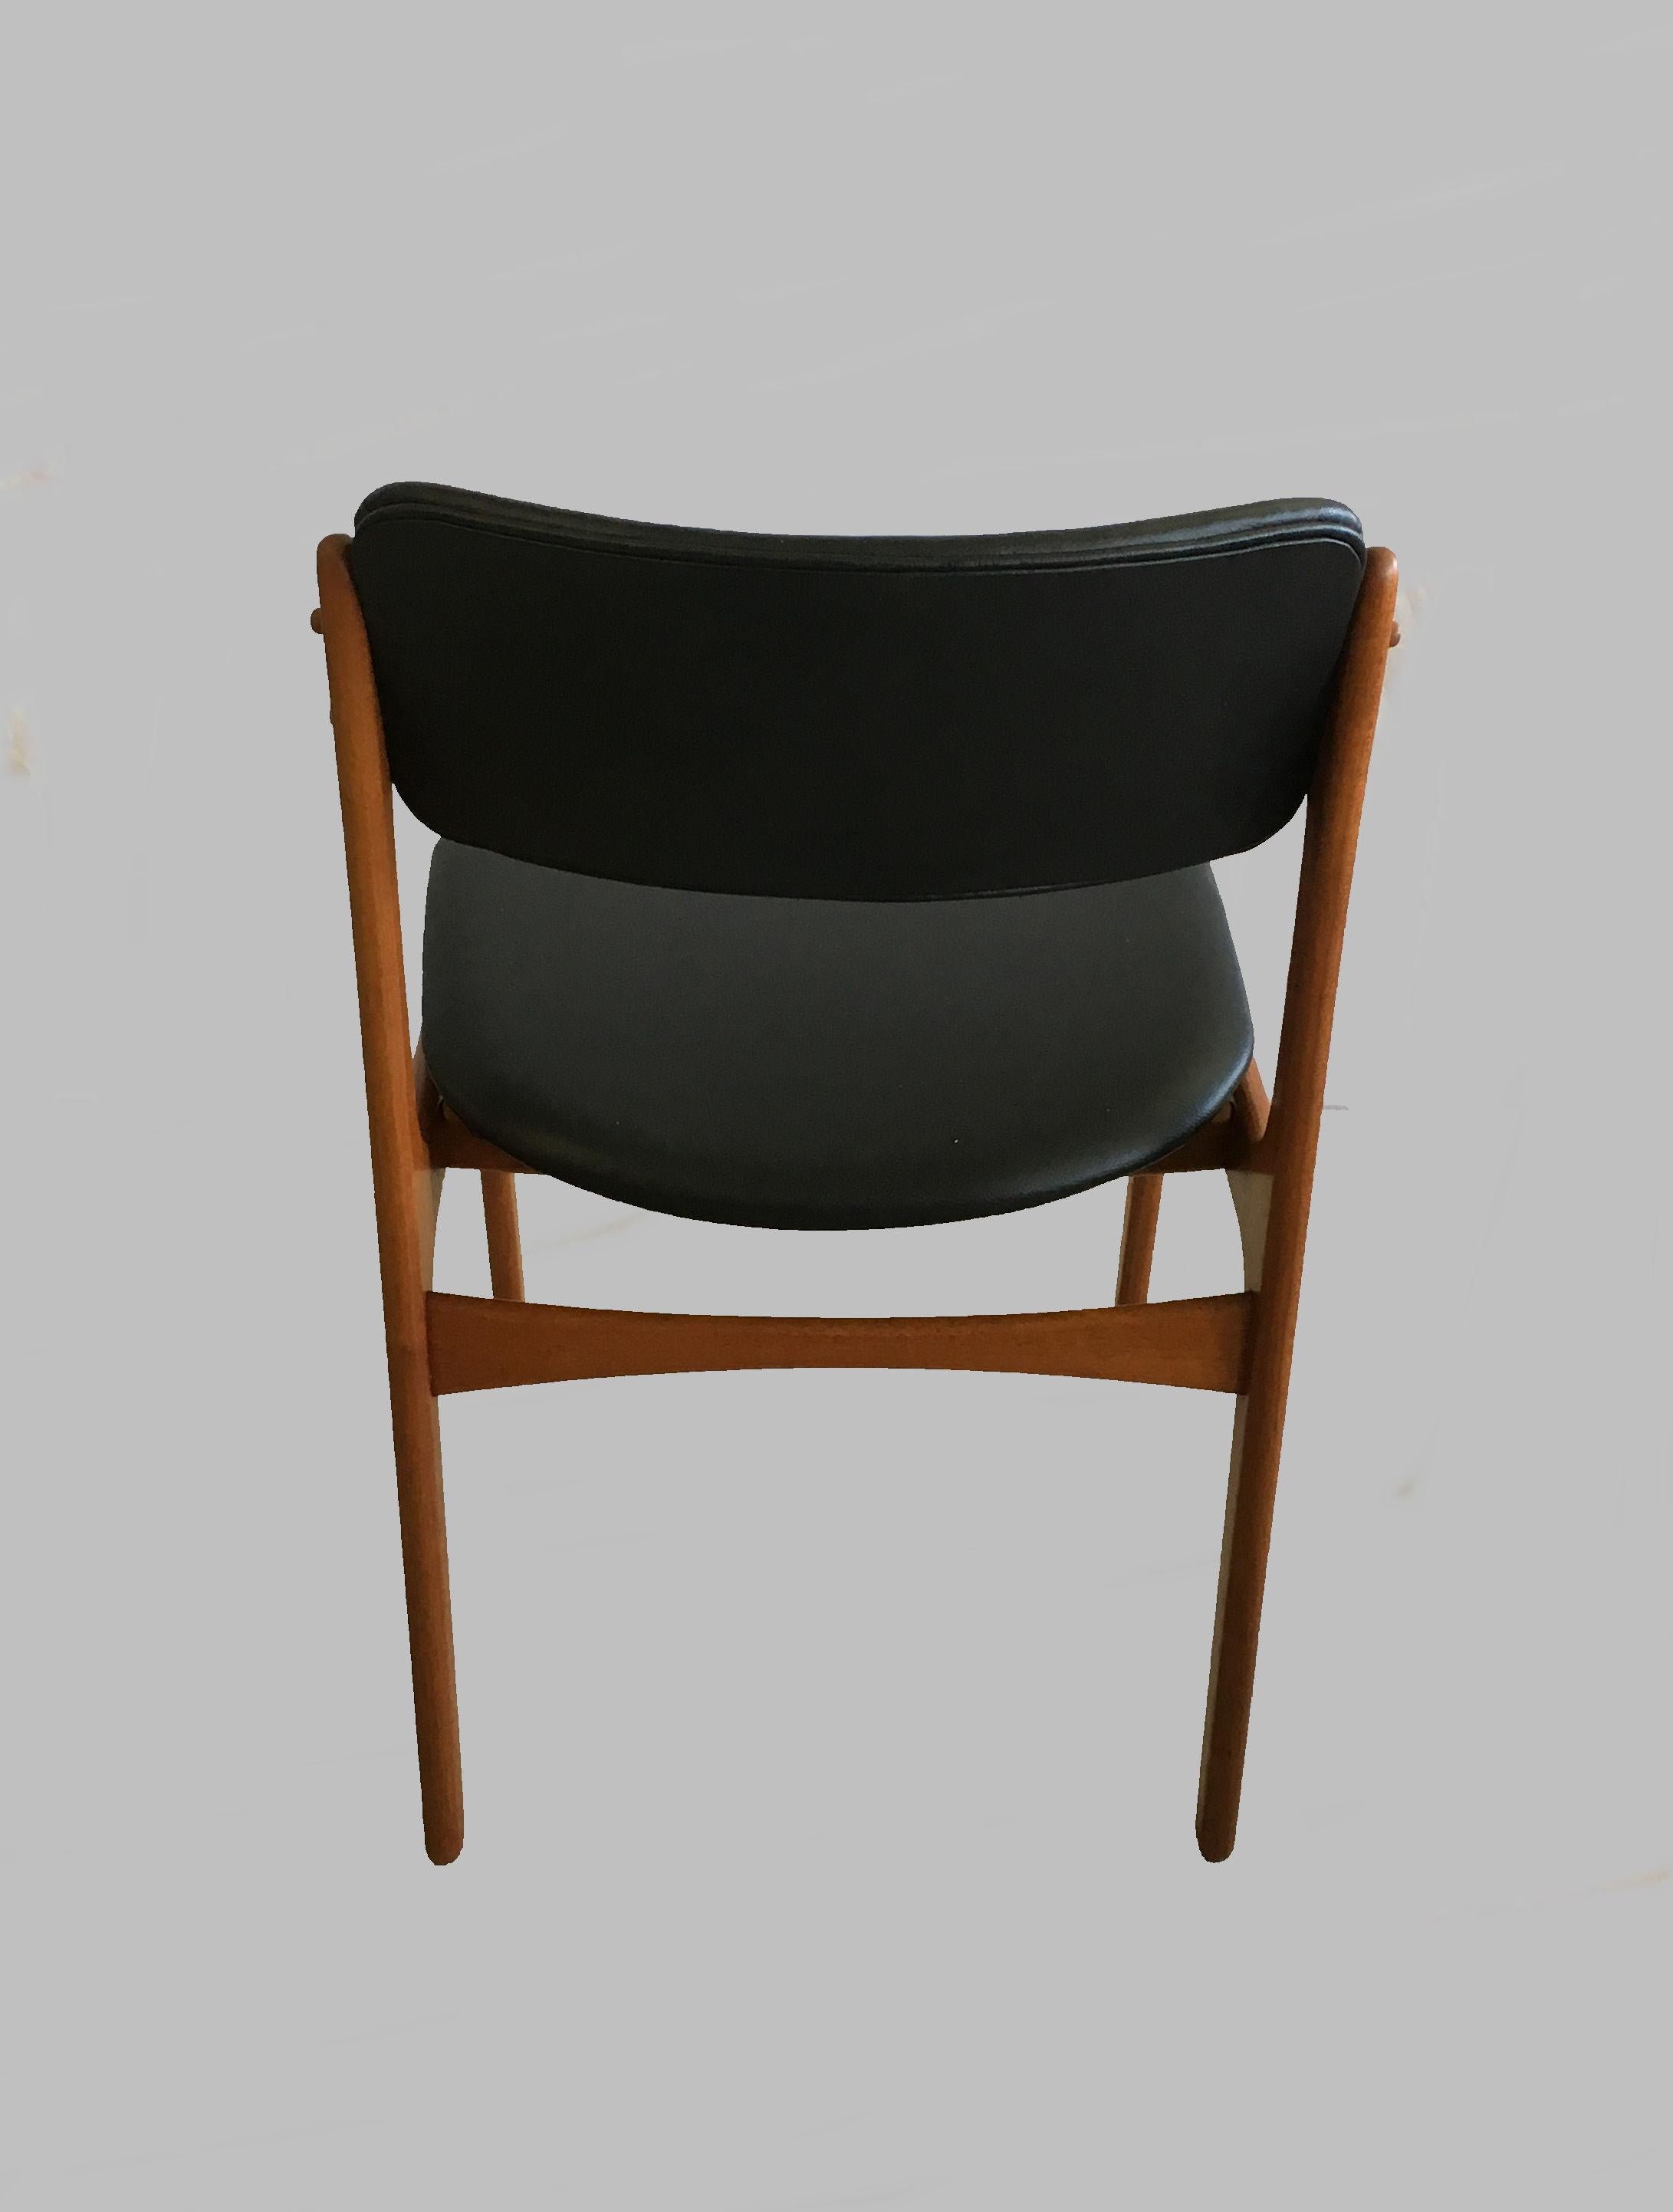 Scandinavian Modern Six Fully Restored Erik Buch Teak Dining Chairs, Reupholstered in Black Leather